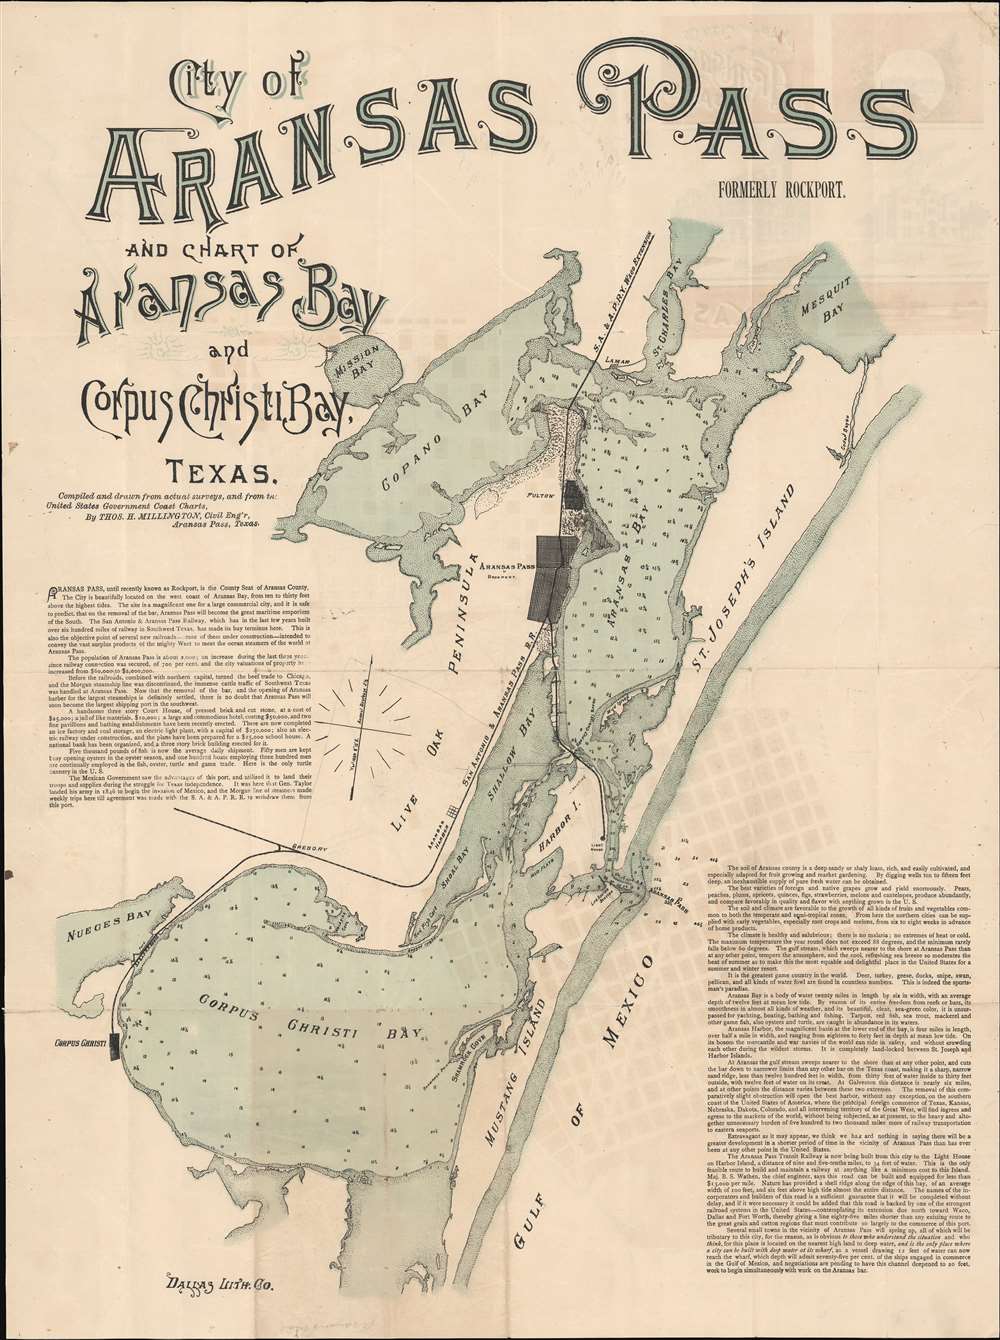 City of Aransas Pass and Chart of Aransas Bau and Corpus Christi Bay Texas. Formerly Rockport. / Map of the City of Aransas Pass Formerly Rockport Texas. - Main View